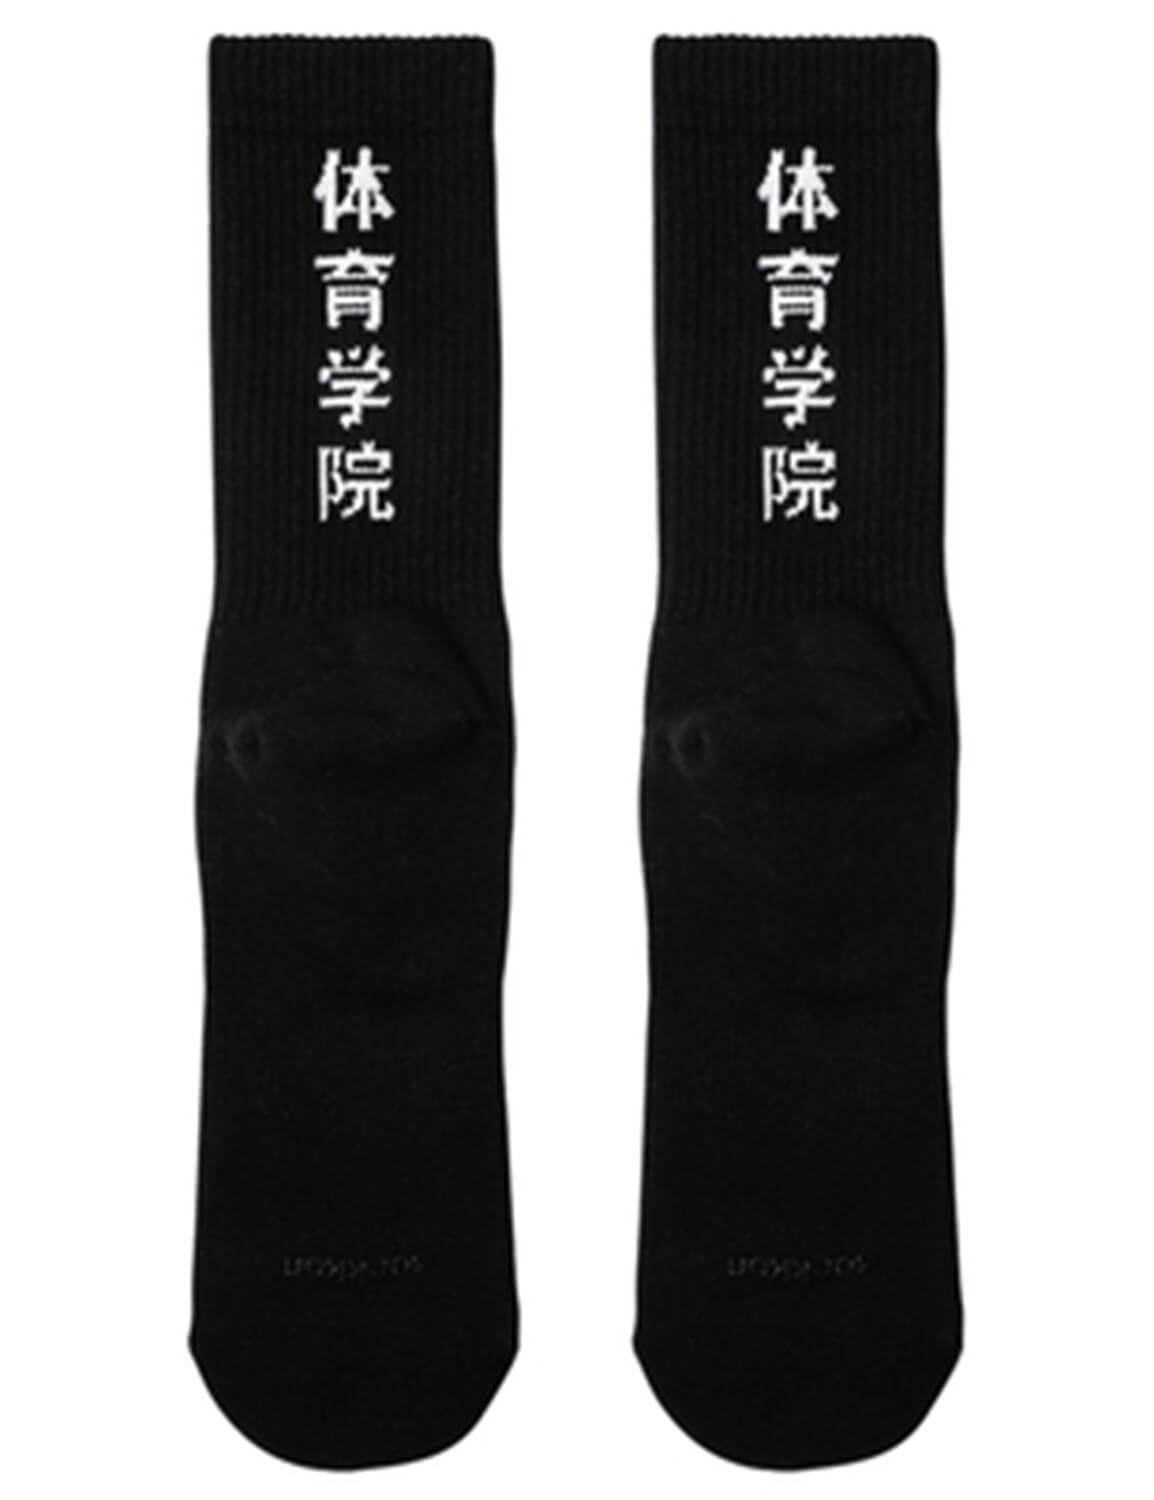 Chinese “体育学院” Crew Socks SINGLE-PACK